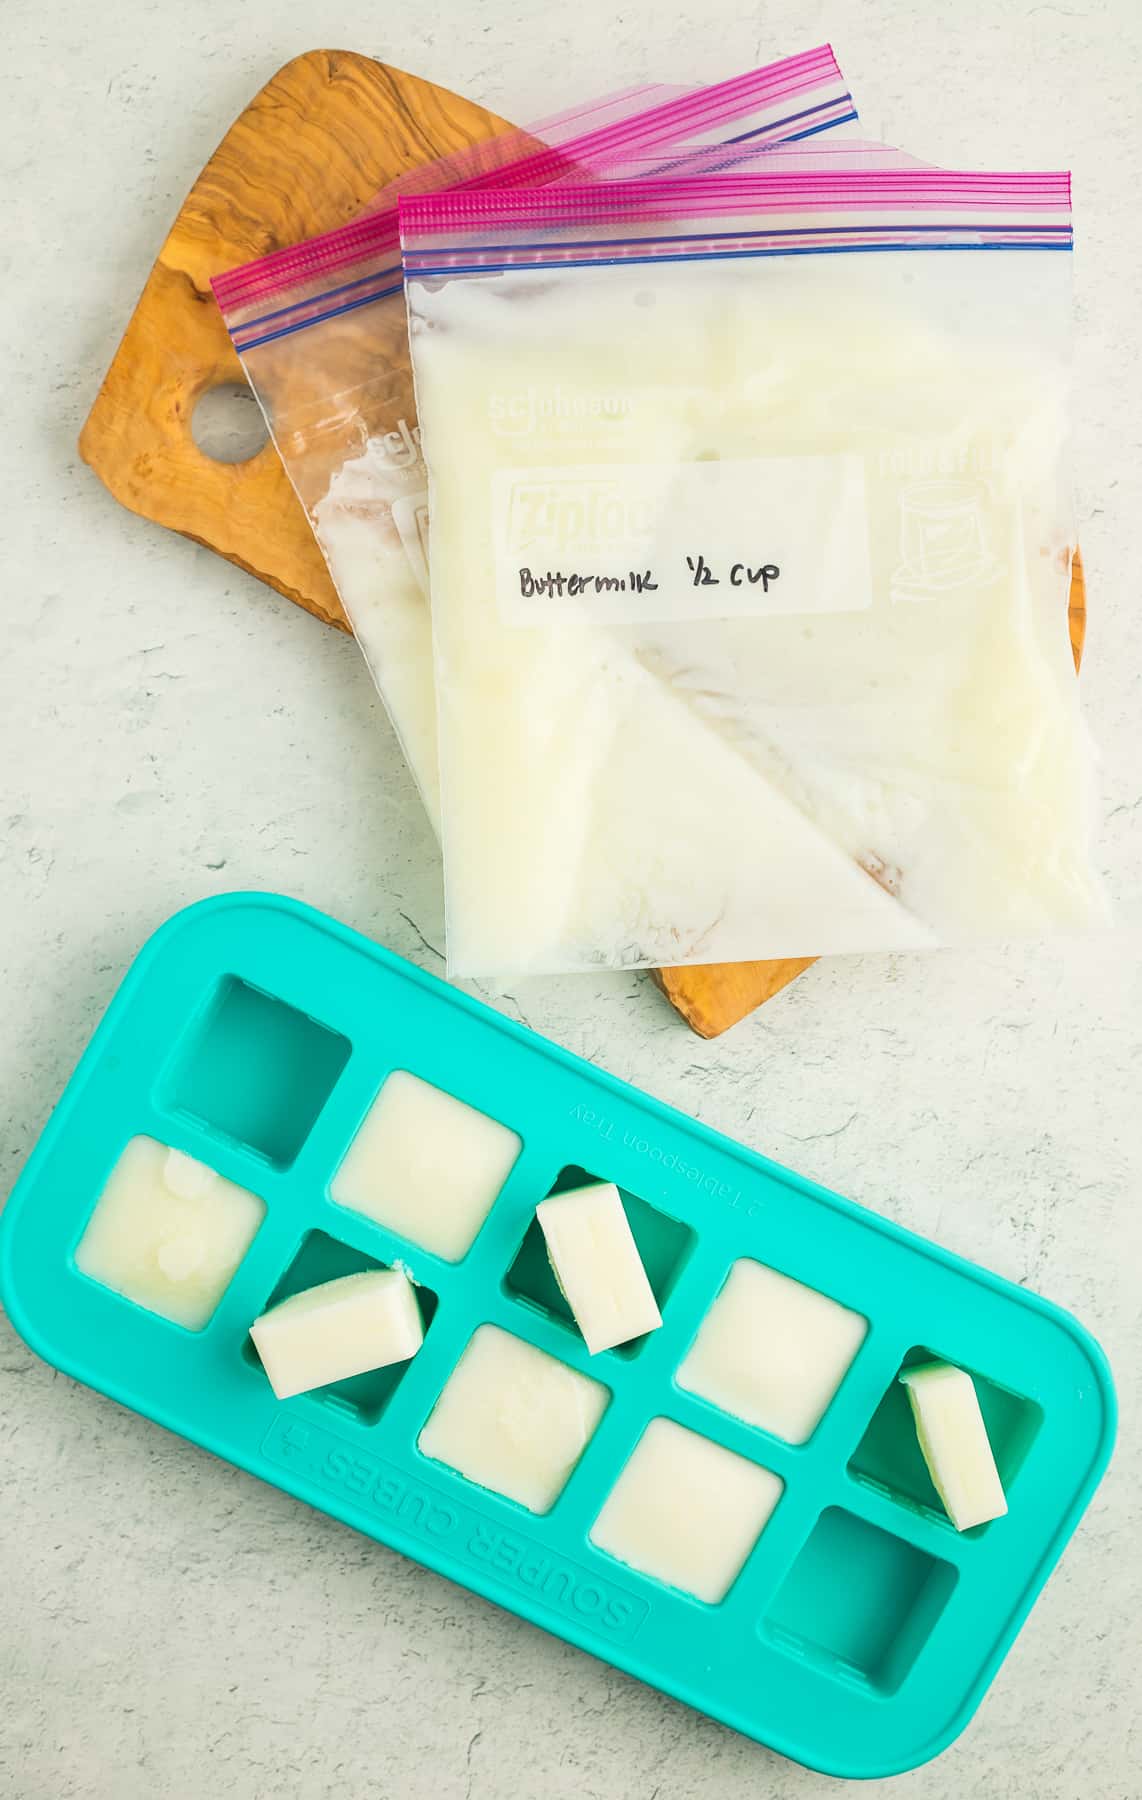 frozen buttermilk in a silicone tray and small plastic ziplocs.